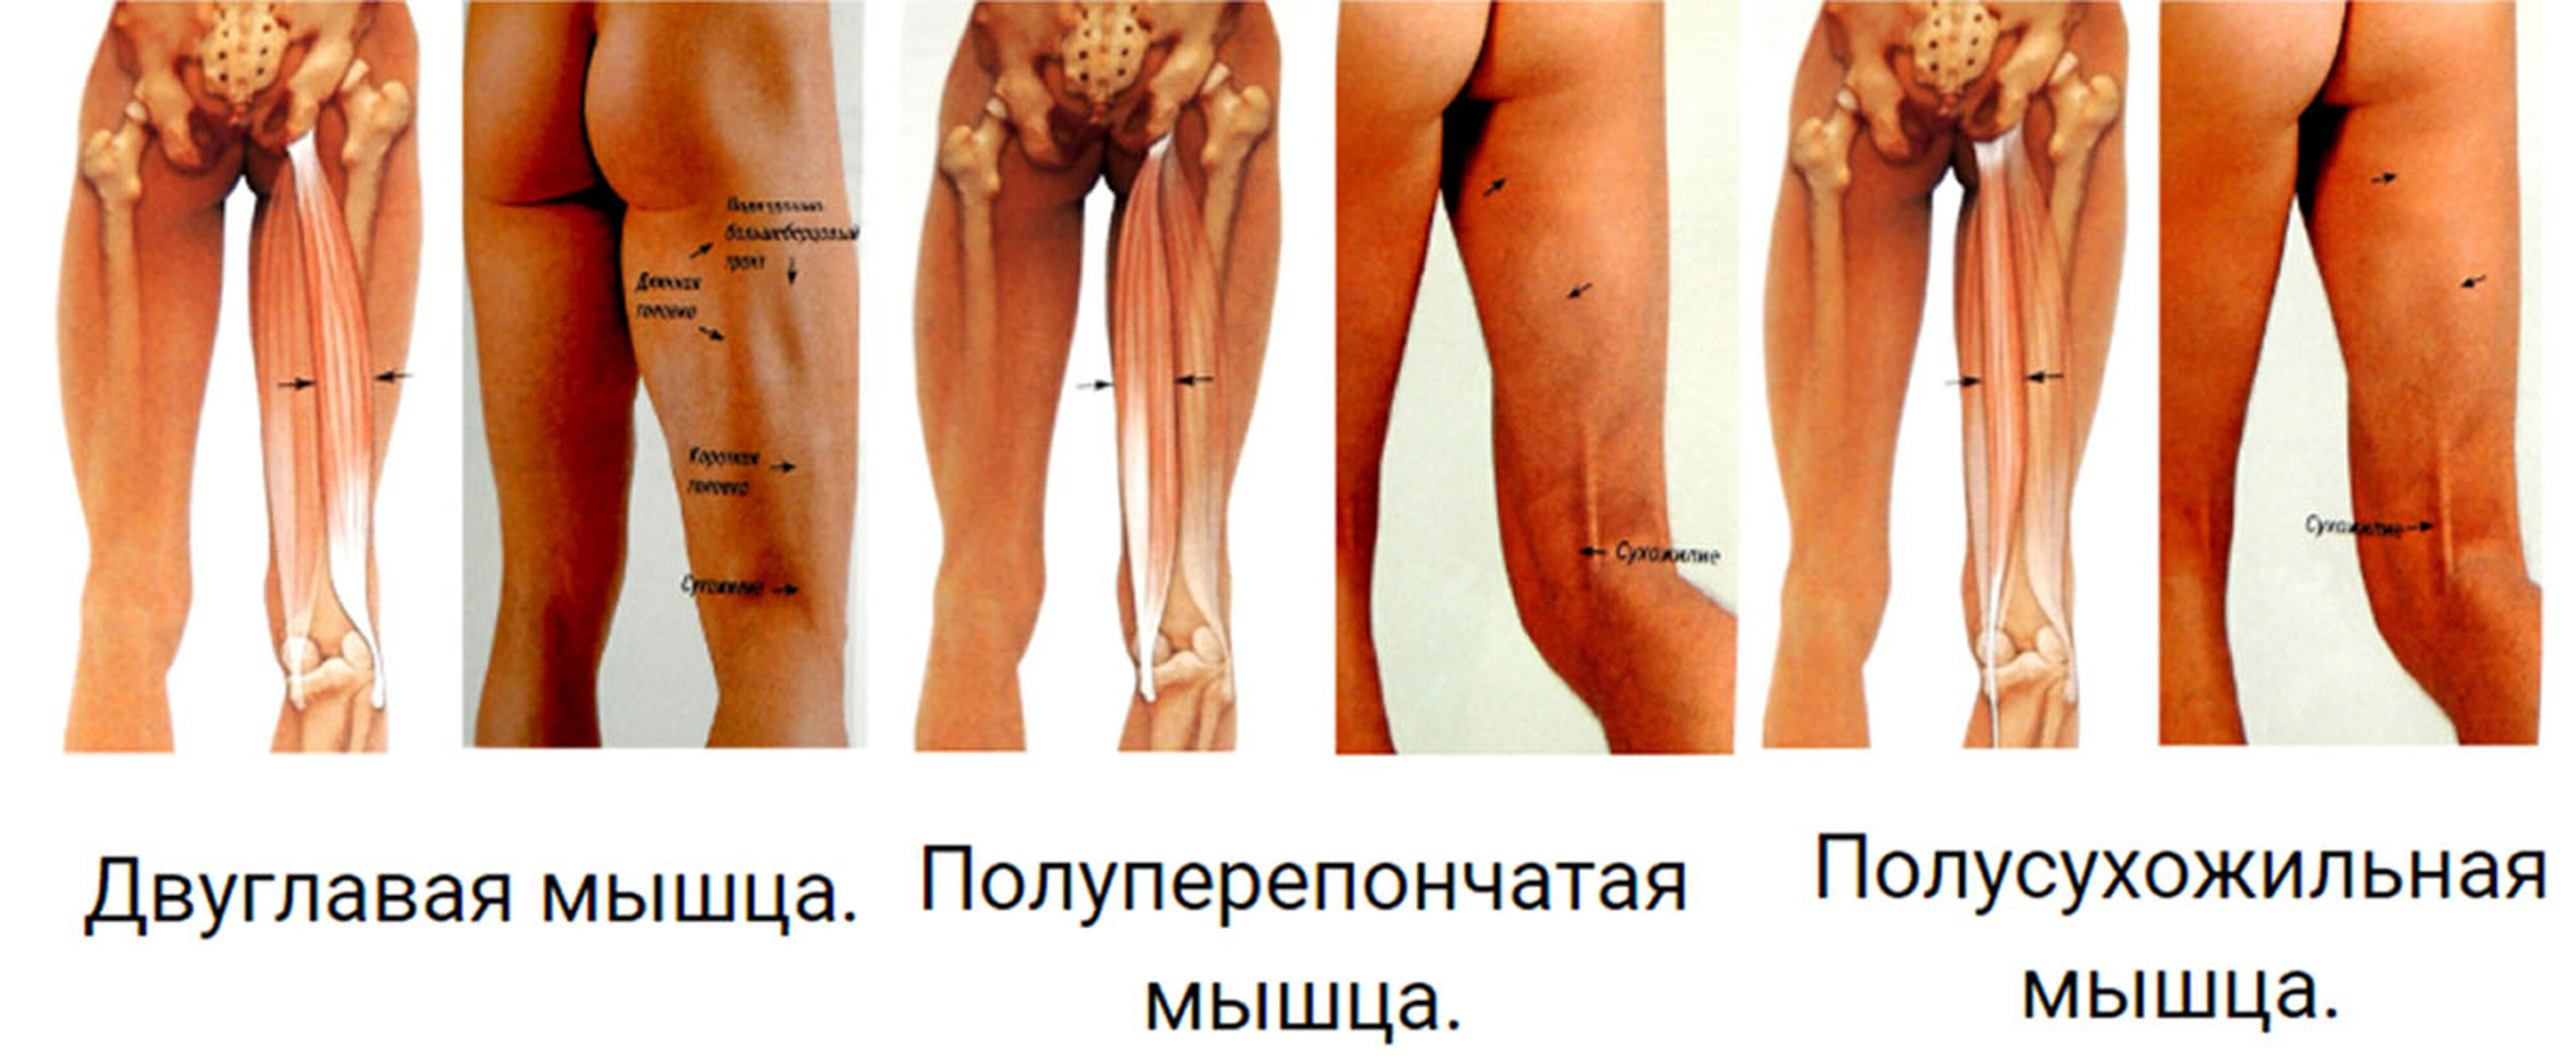 Работа мышц при сгибании коленного сустава